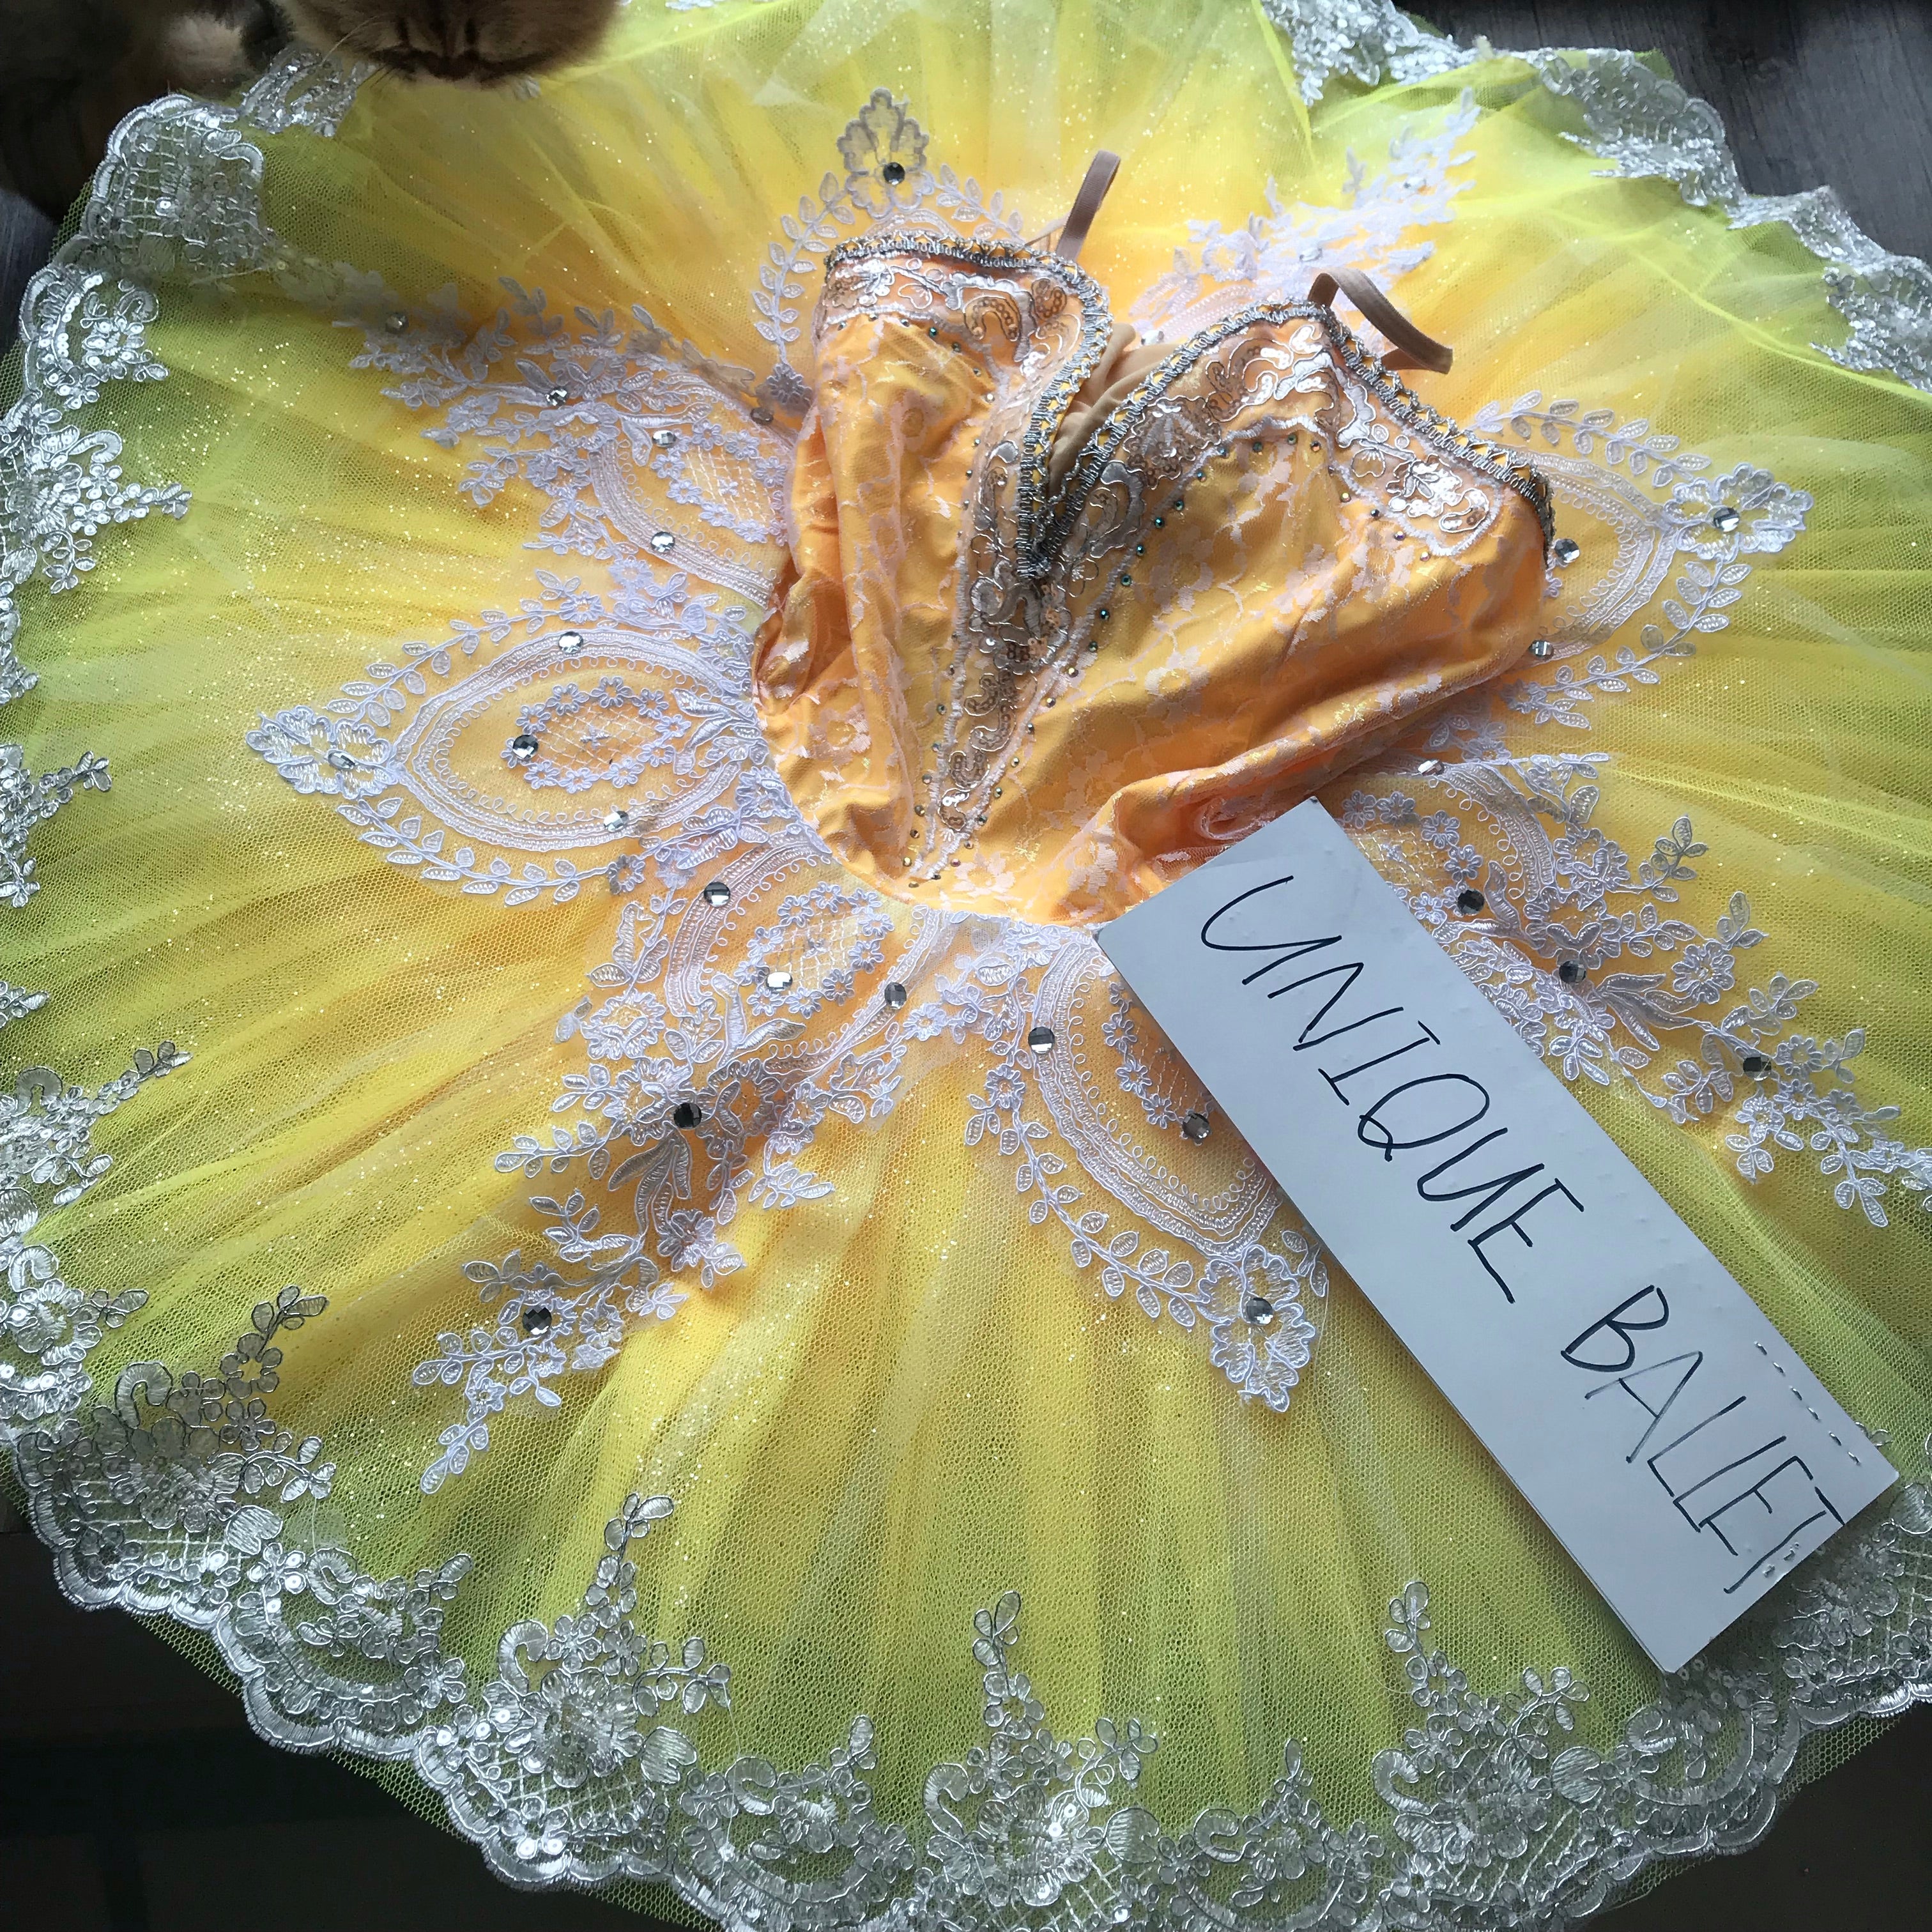 Cost-Effective Sleeping Beauty Yellow Classic Ballet TuTu Costume